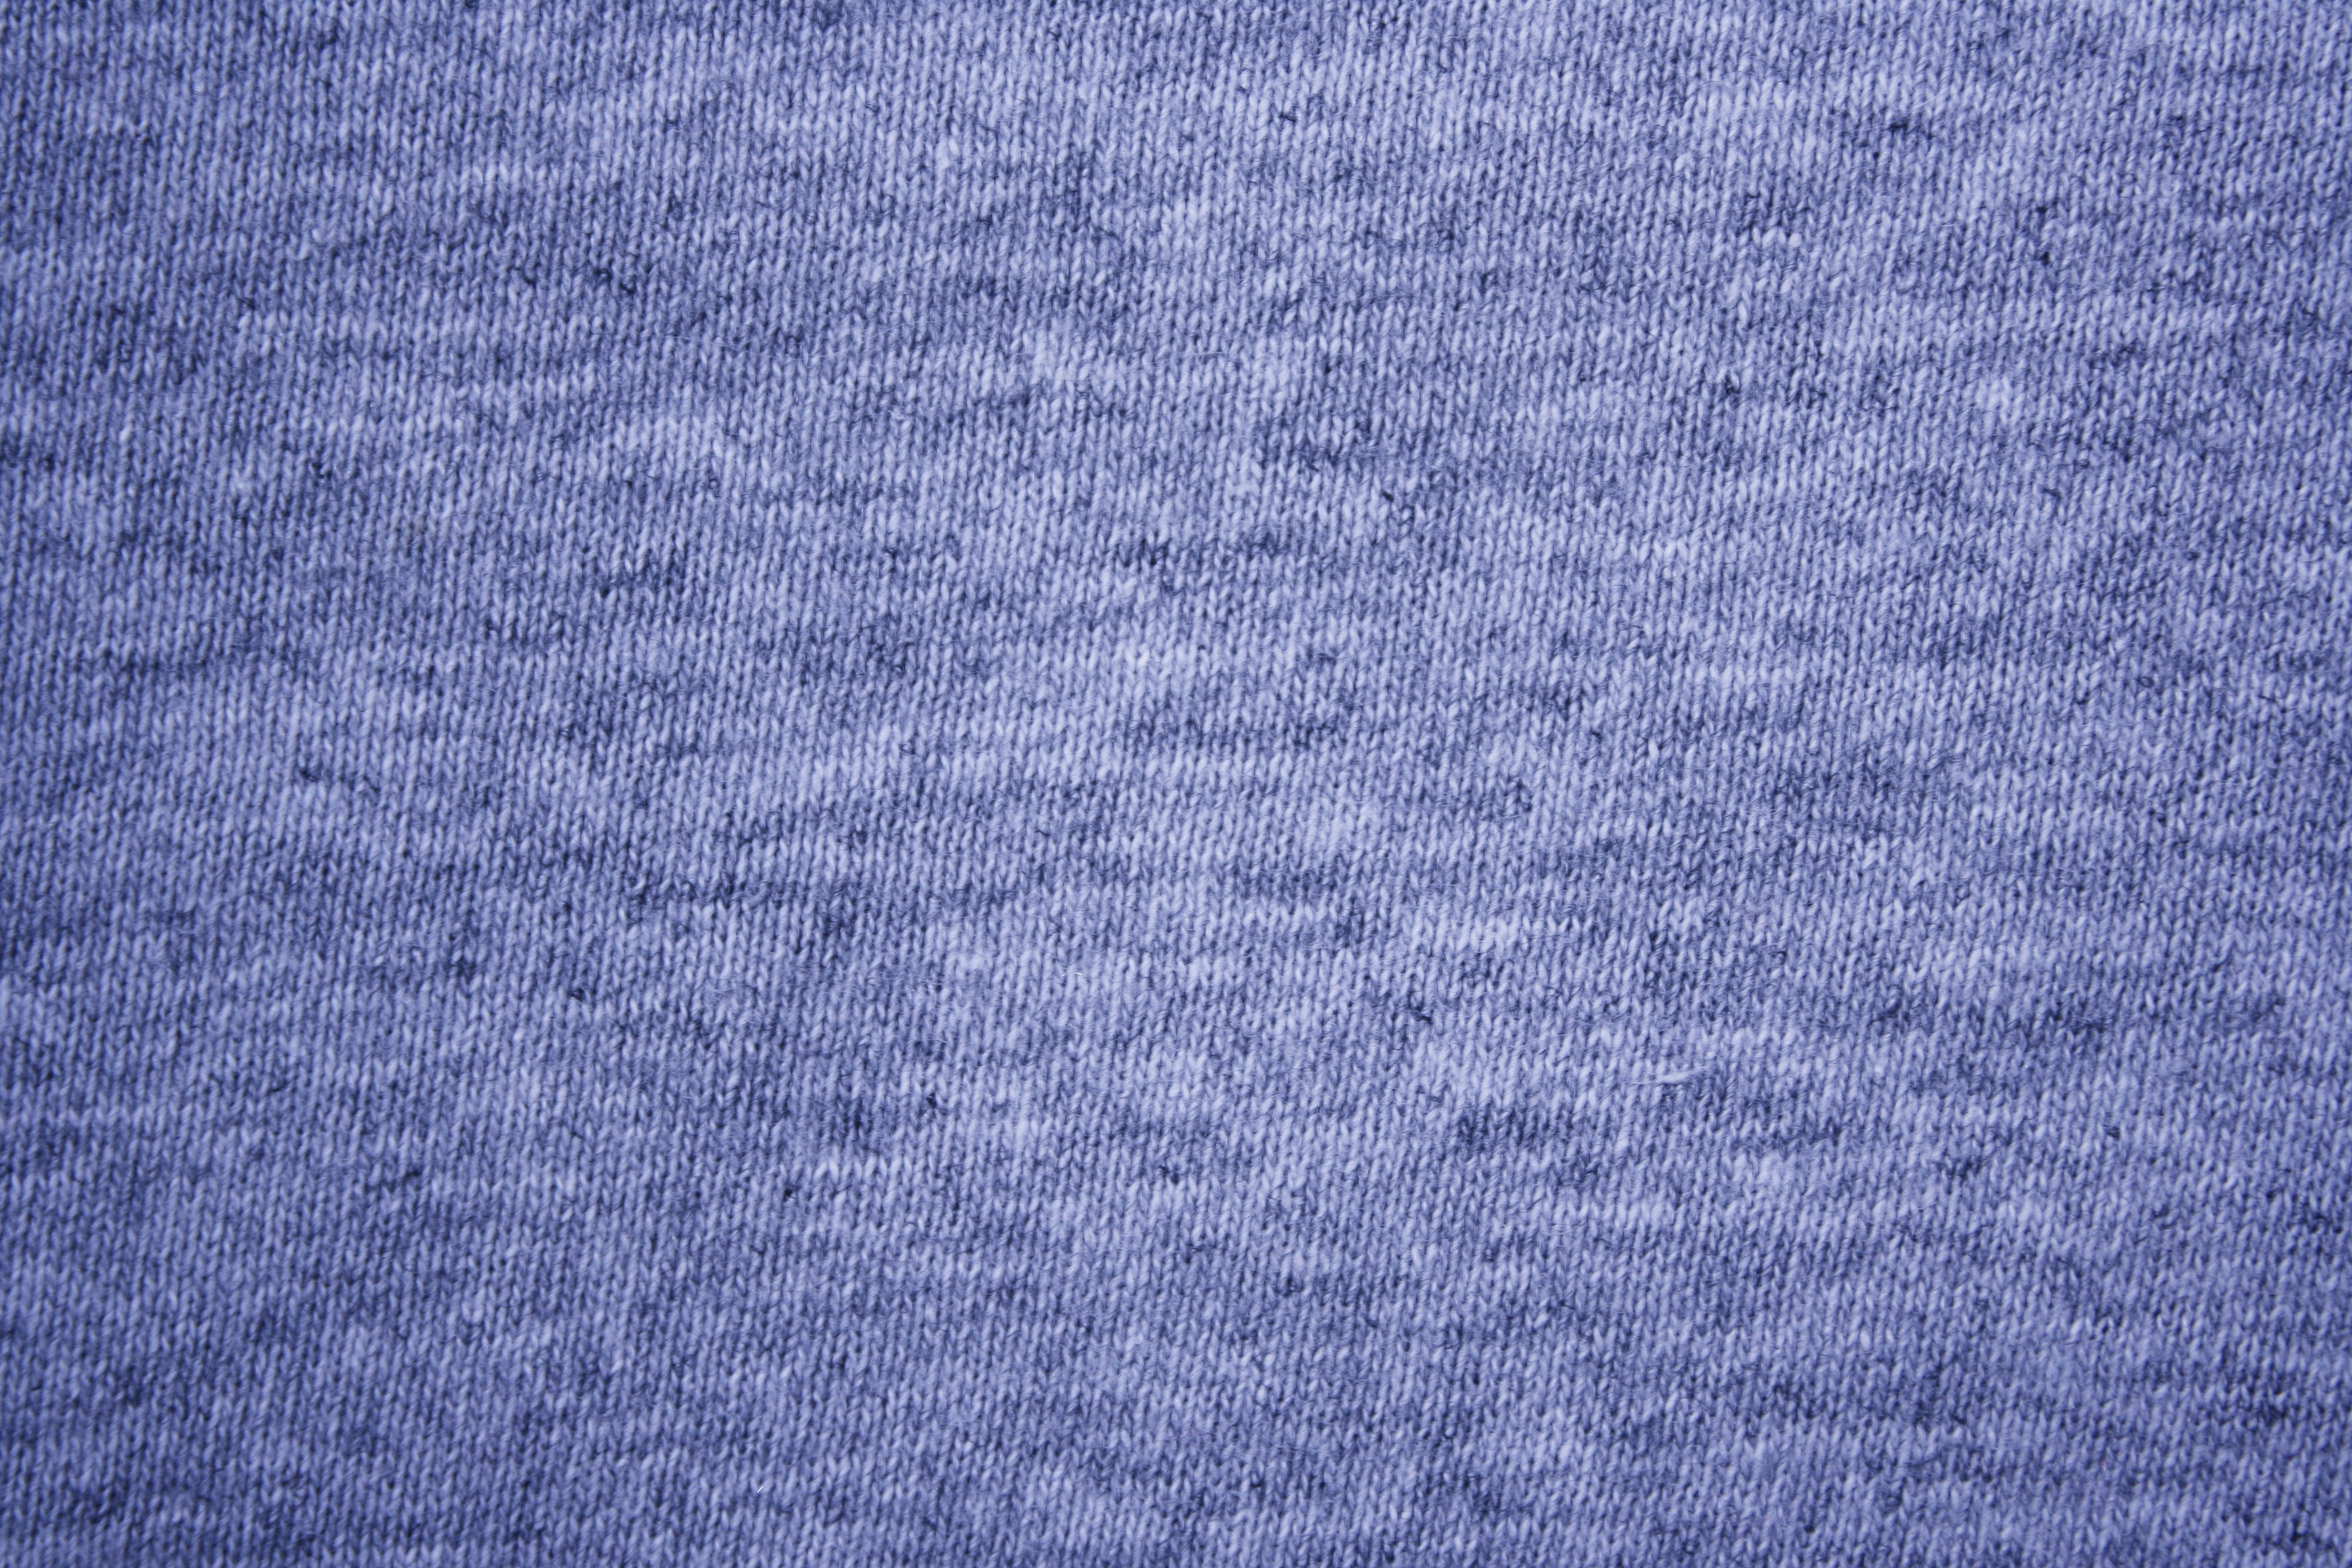 https://www.photos-public-domain.com/wp-content/uploads/2012/09/blue-heather-knit-t-shit-fabric-texture.jpg